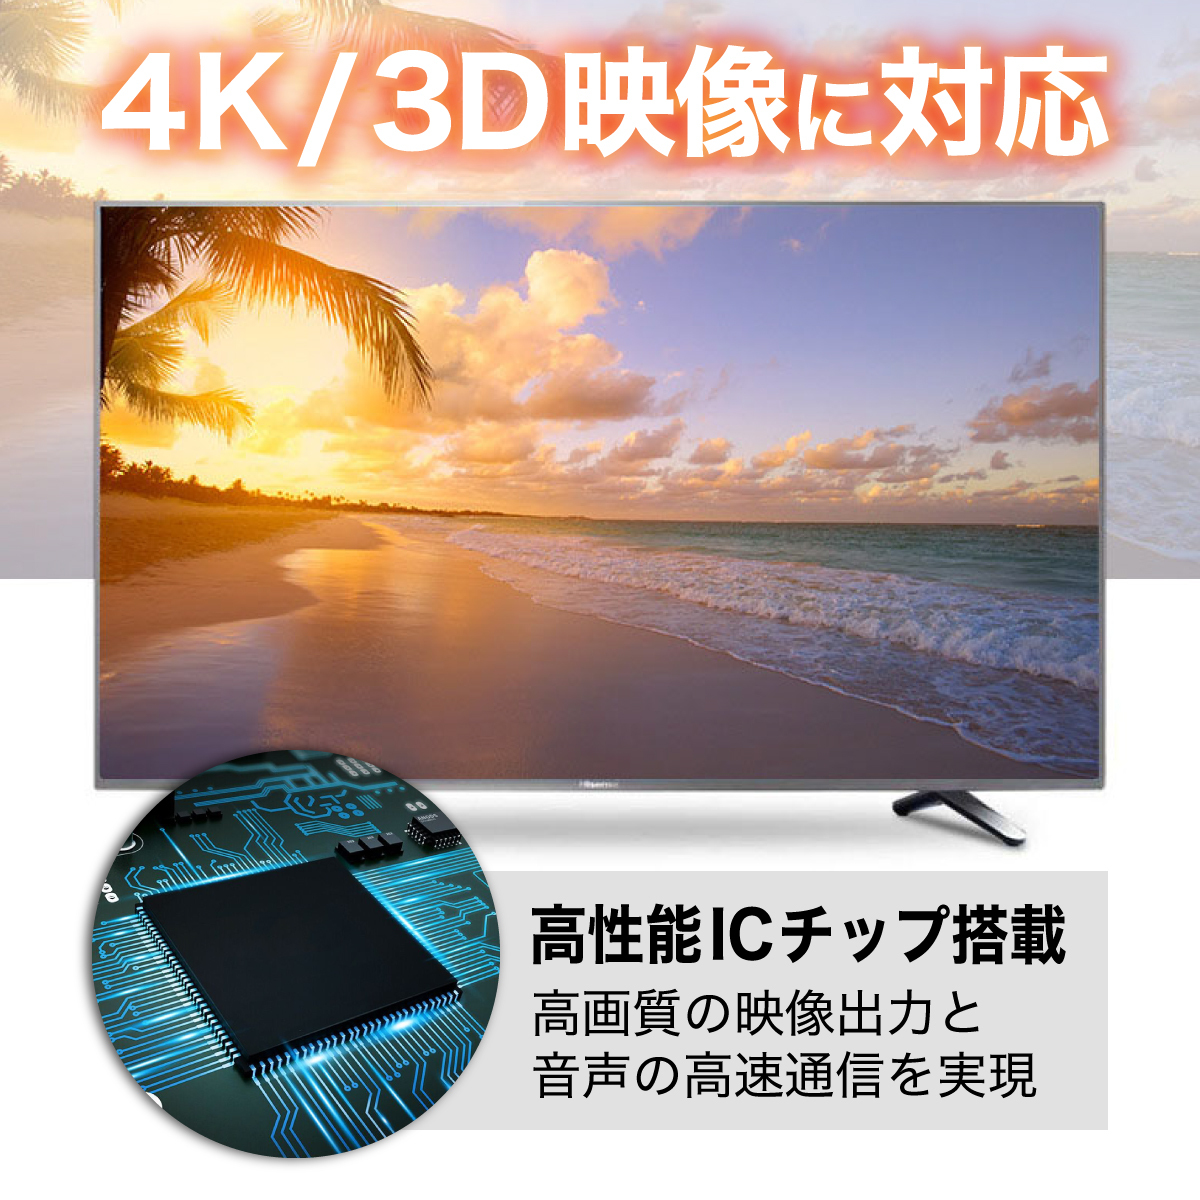 HDMI переключатель дистрибьютор селектор сплиттер переключатель .- переключатель монитор 4K 3D